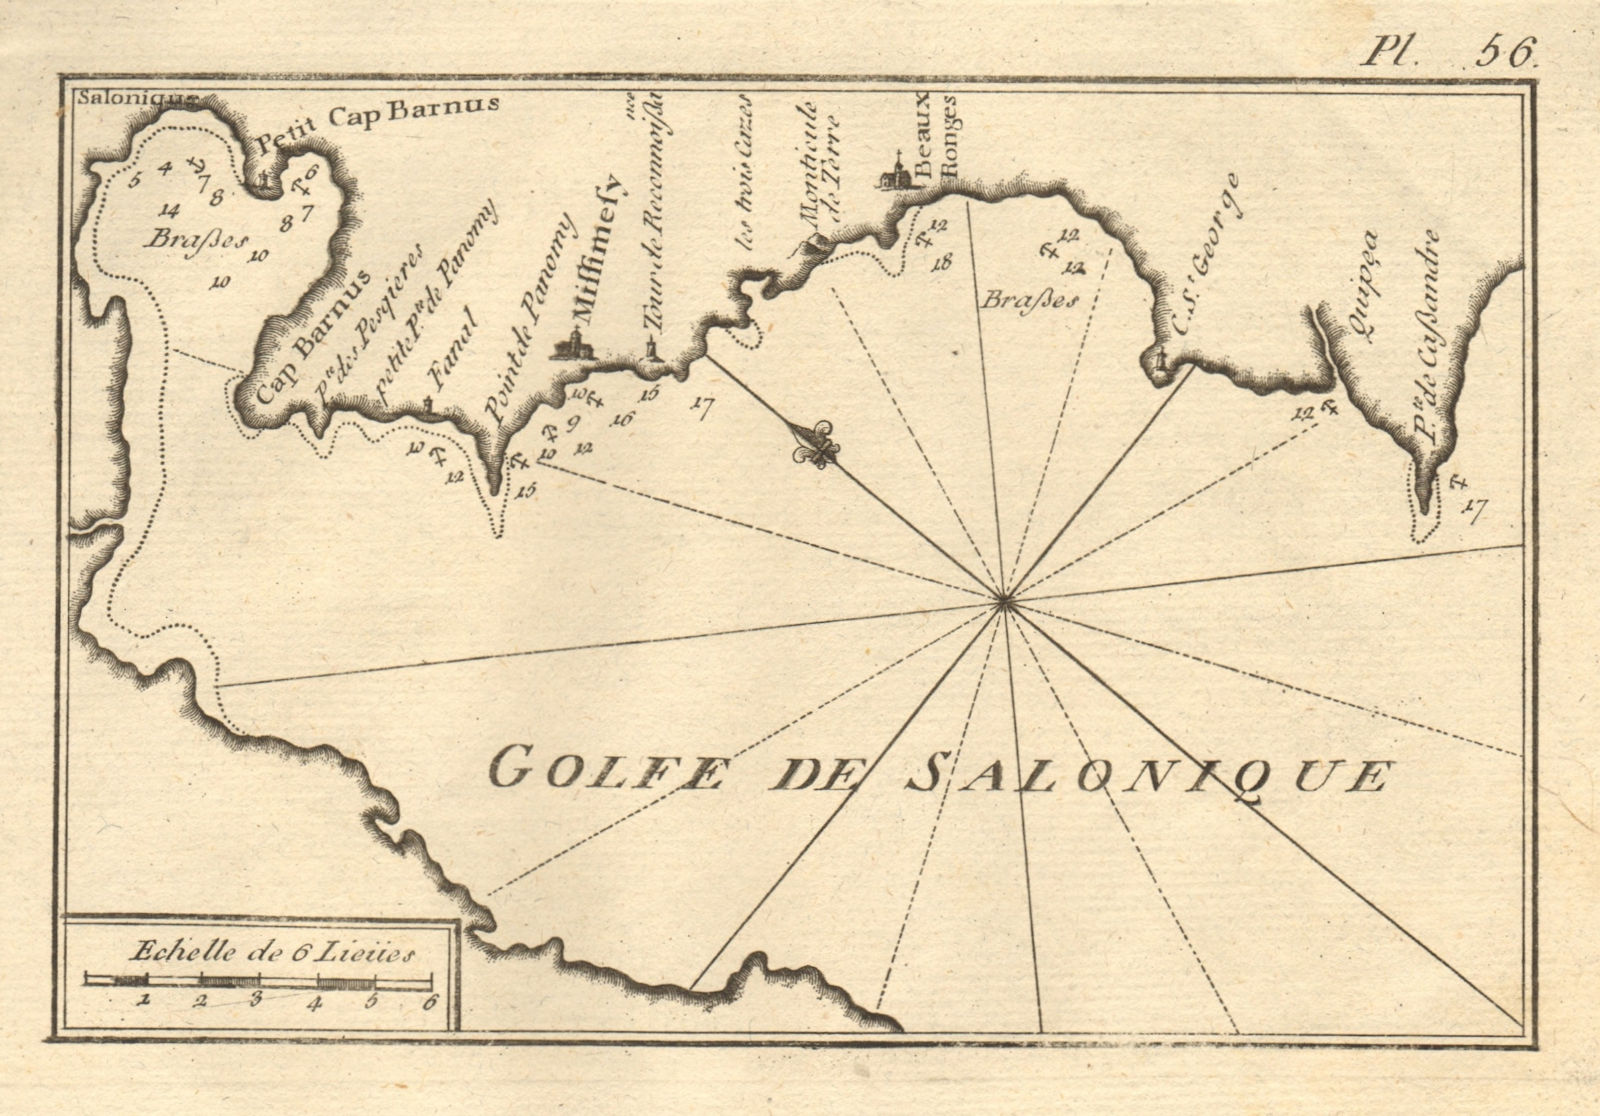 Golfe de Salonique. Thermaic Gulf of Salonika. Thessaloniki Greece ROUX 1804 map